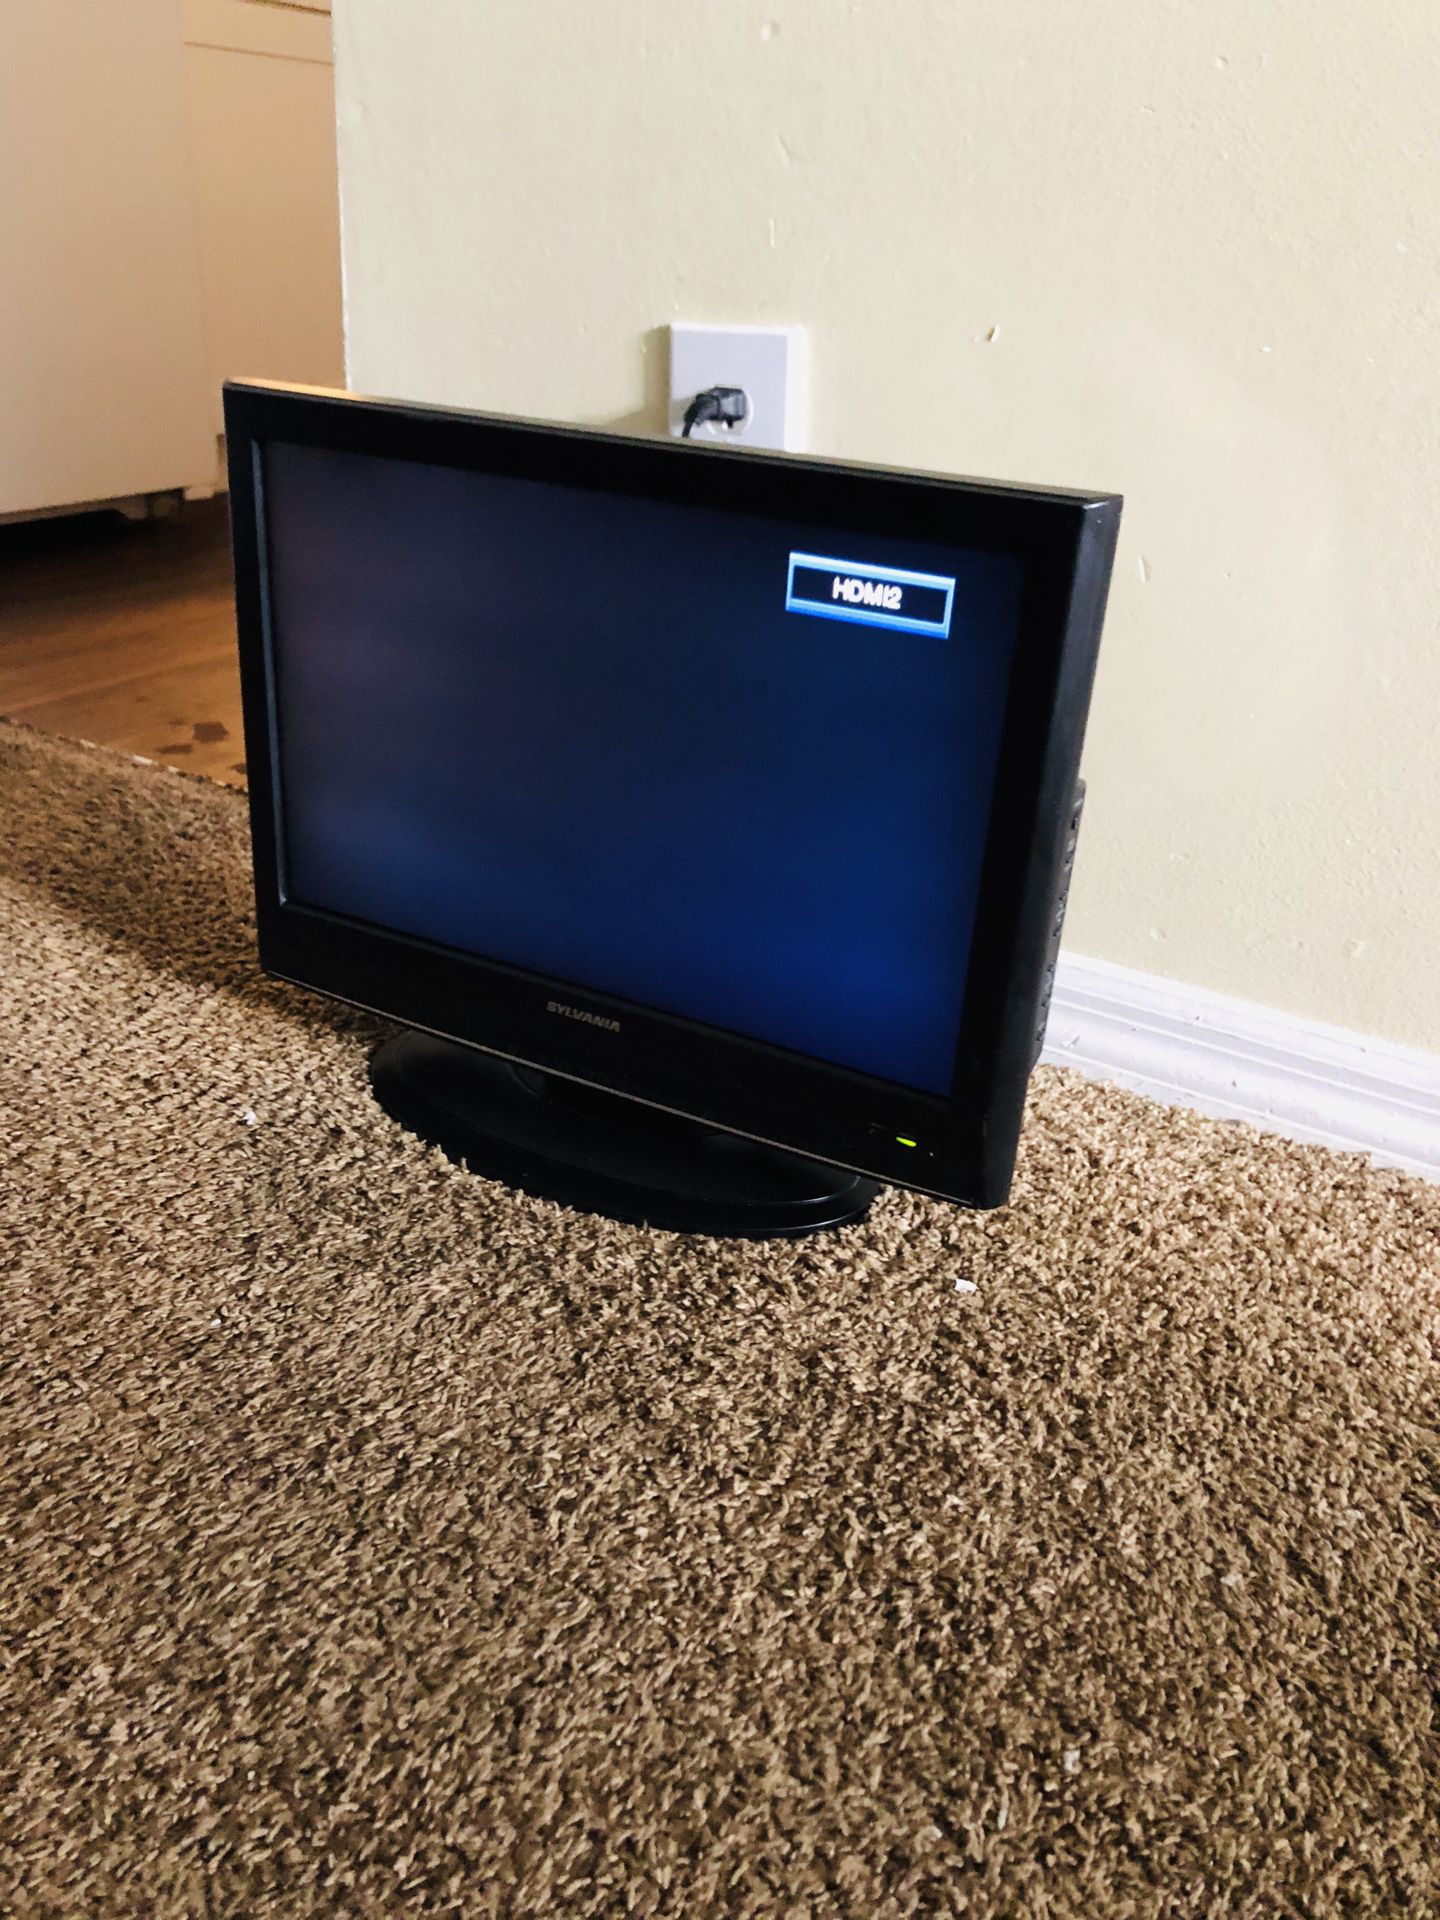 TV sylvania 20 inch’s